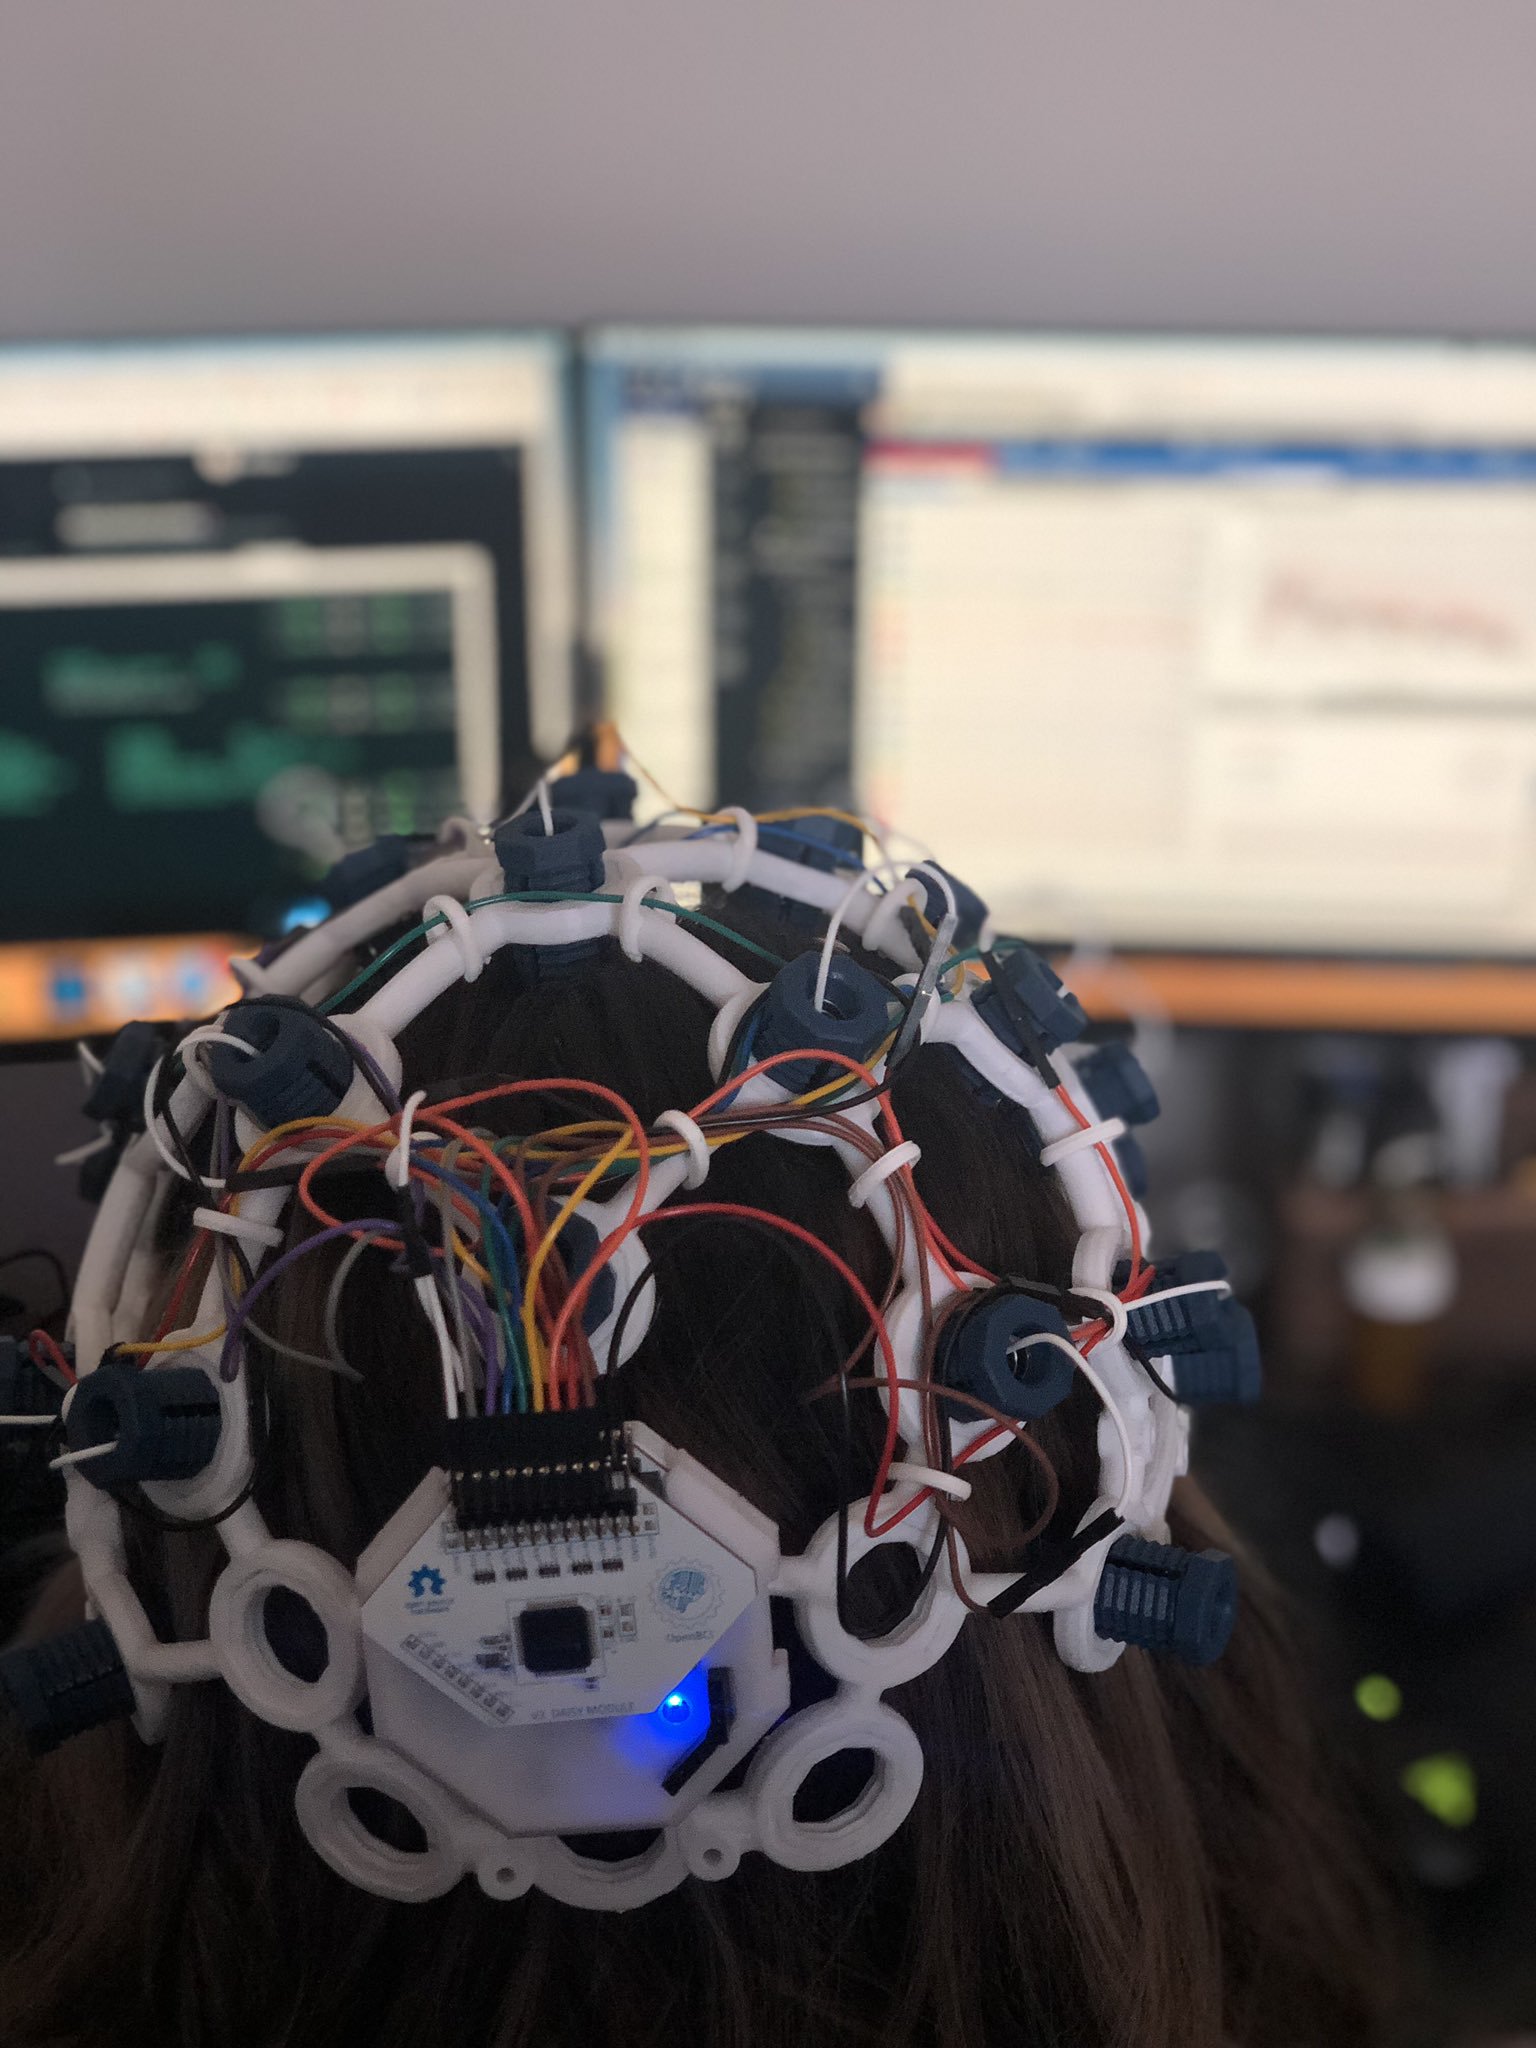 OpenBCI Ultracortex EEG Headset from the back